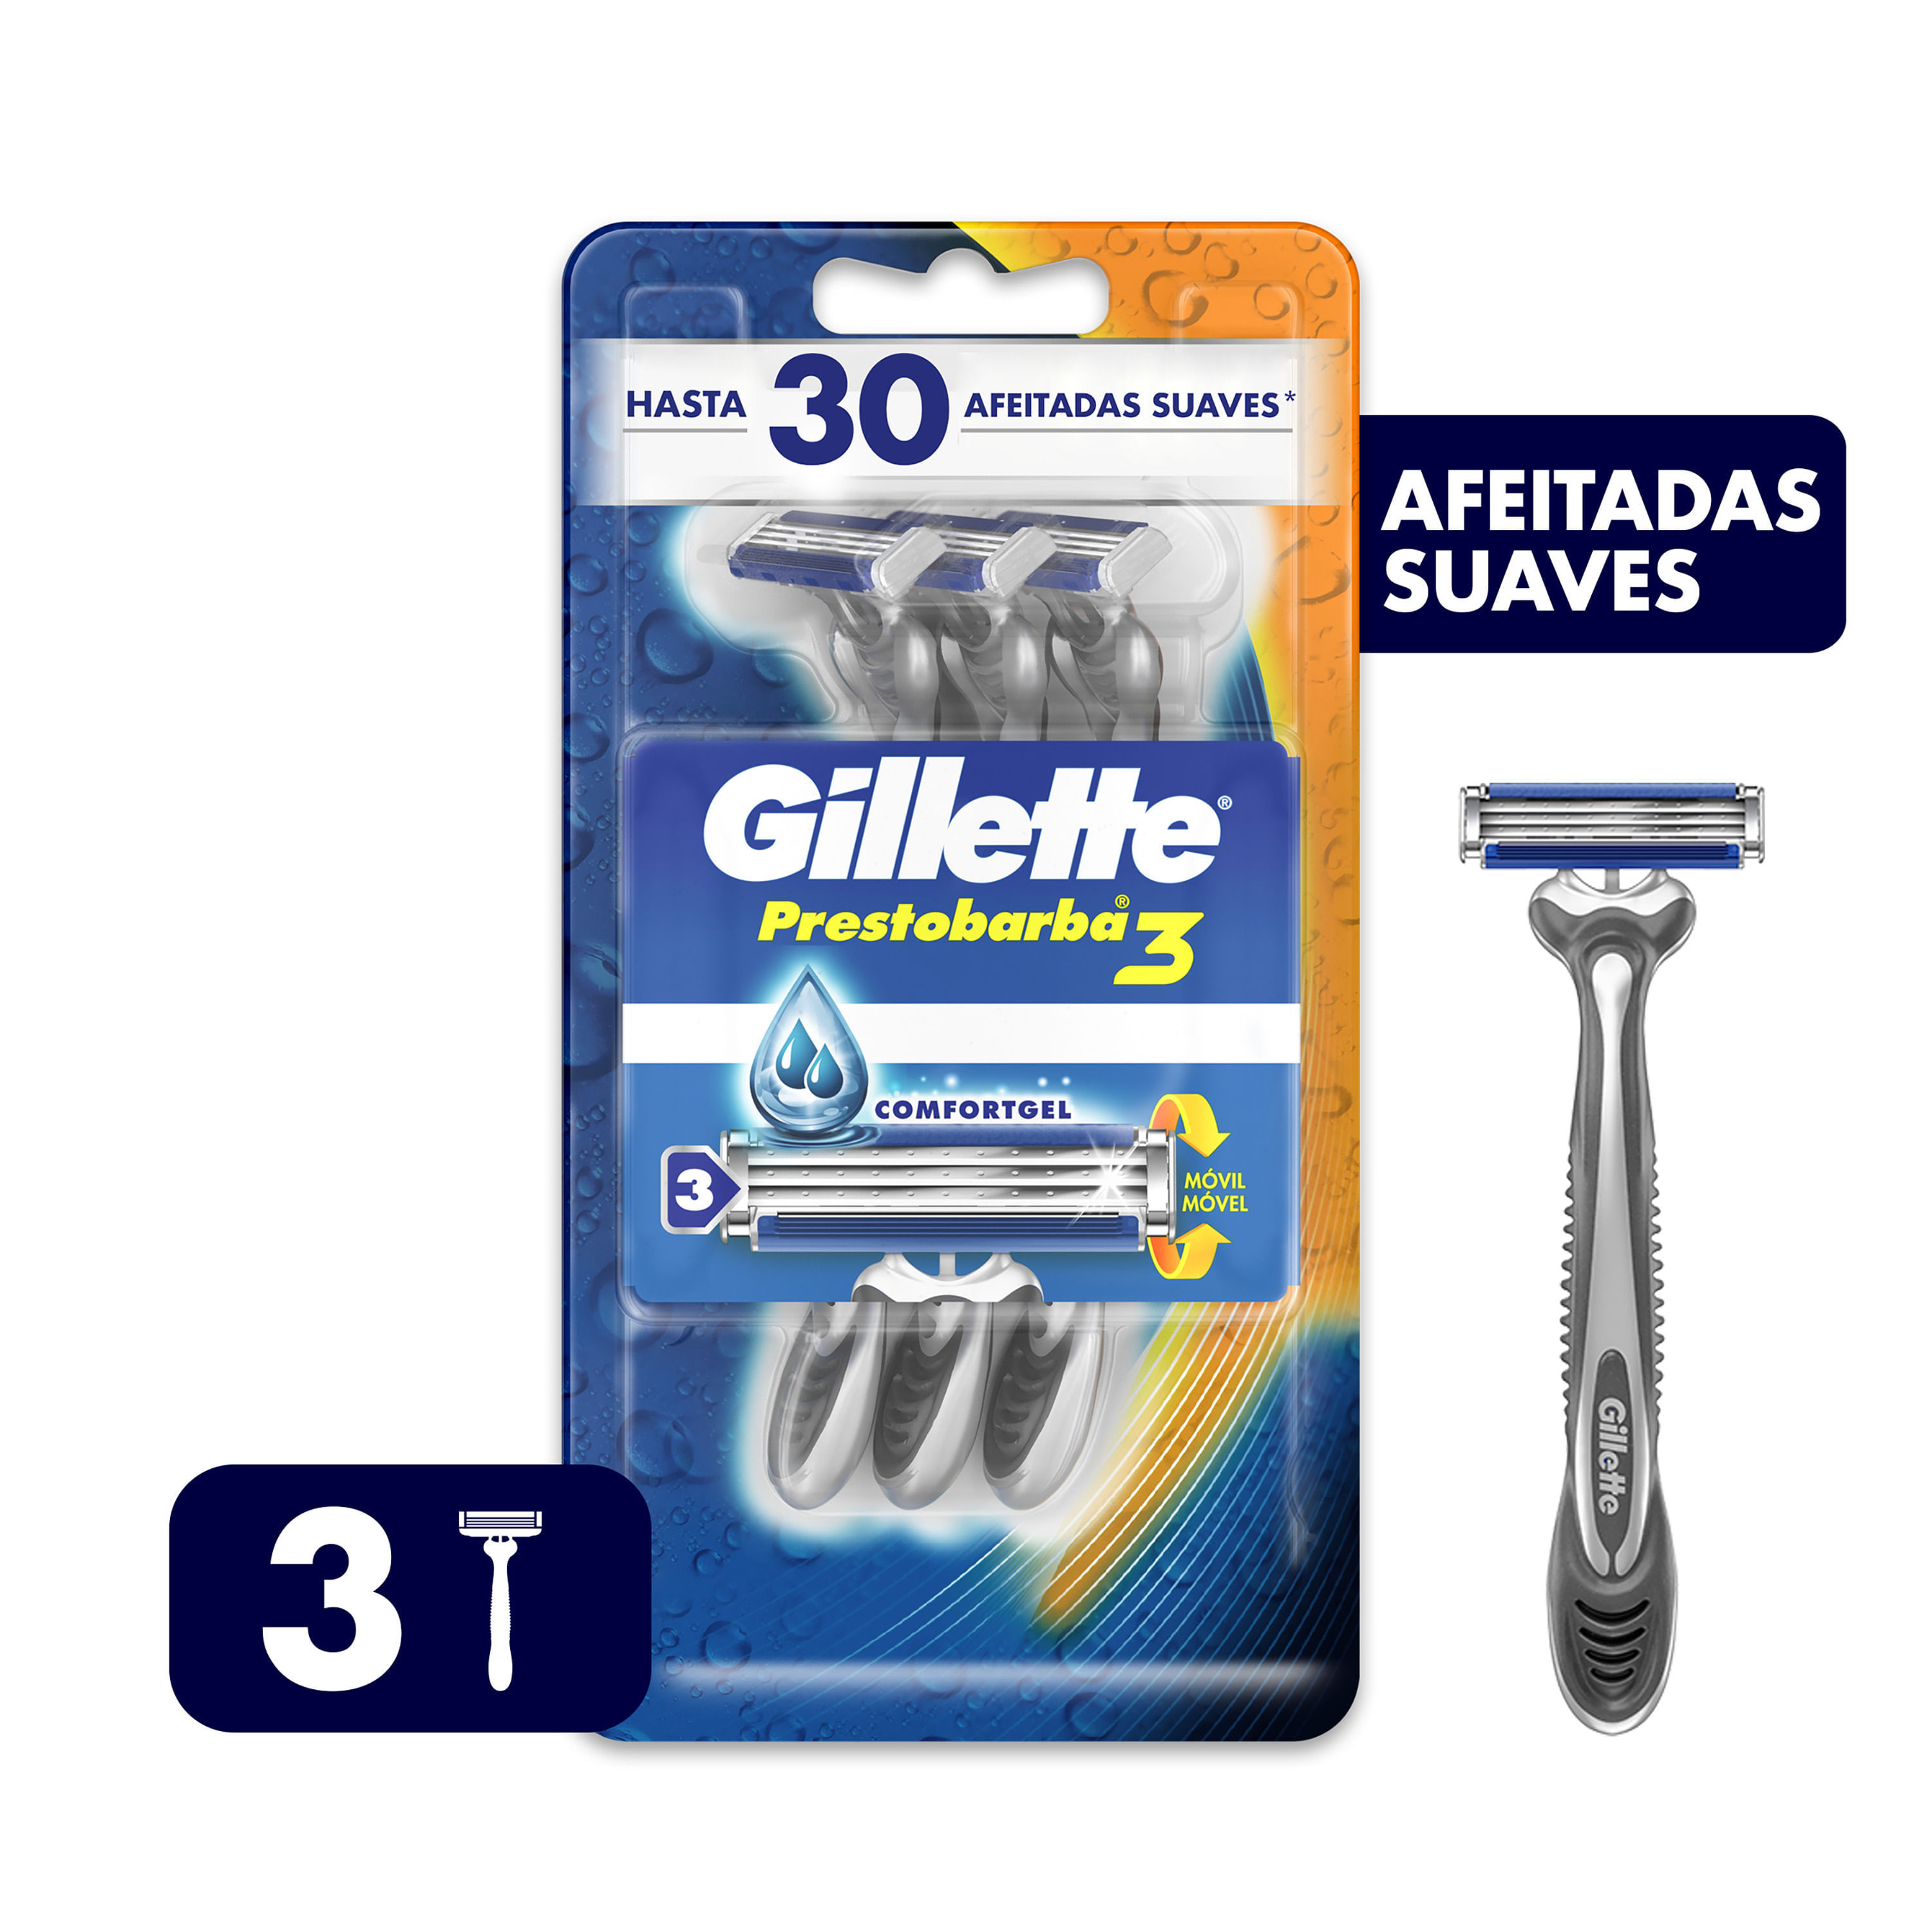 M-quinas-Para-Afeitar-Desechables-Gillette-Prestobarba3-3-Unidades-1-15691